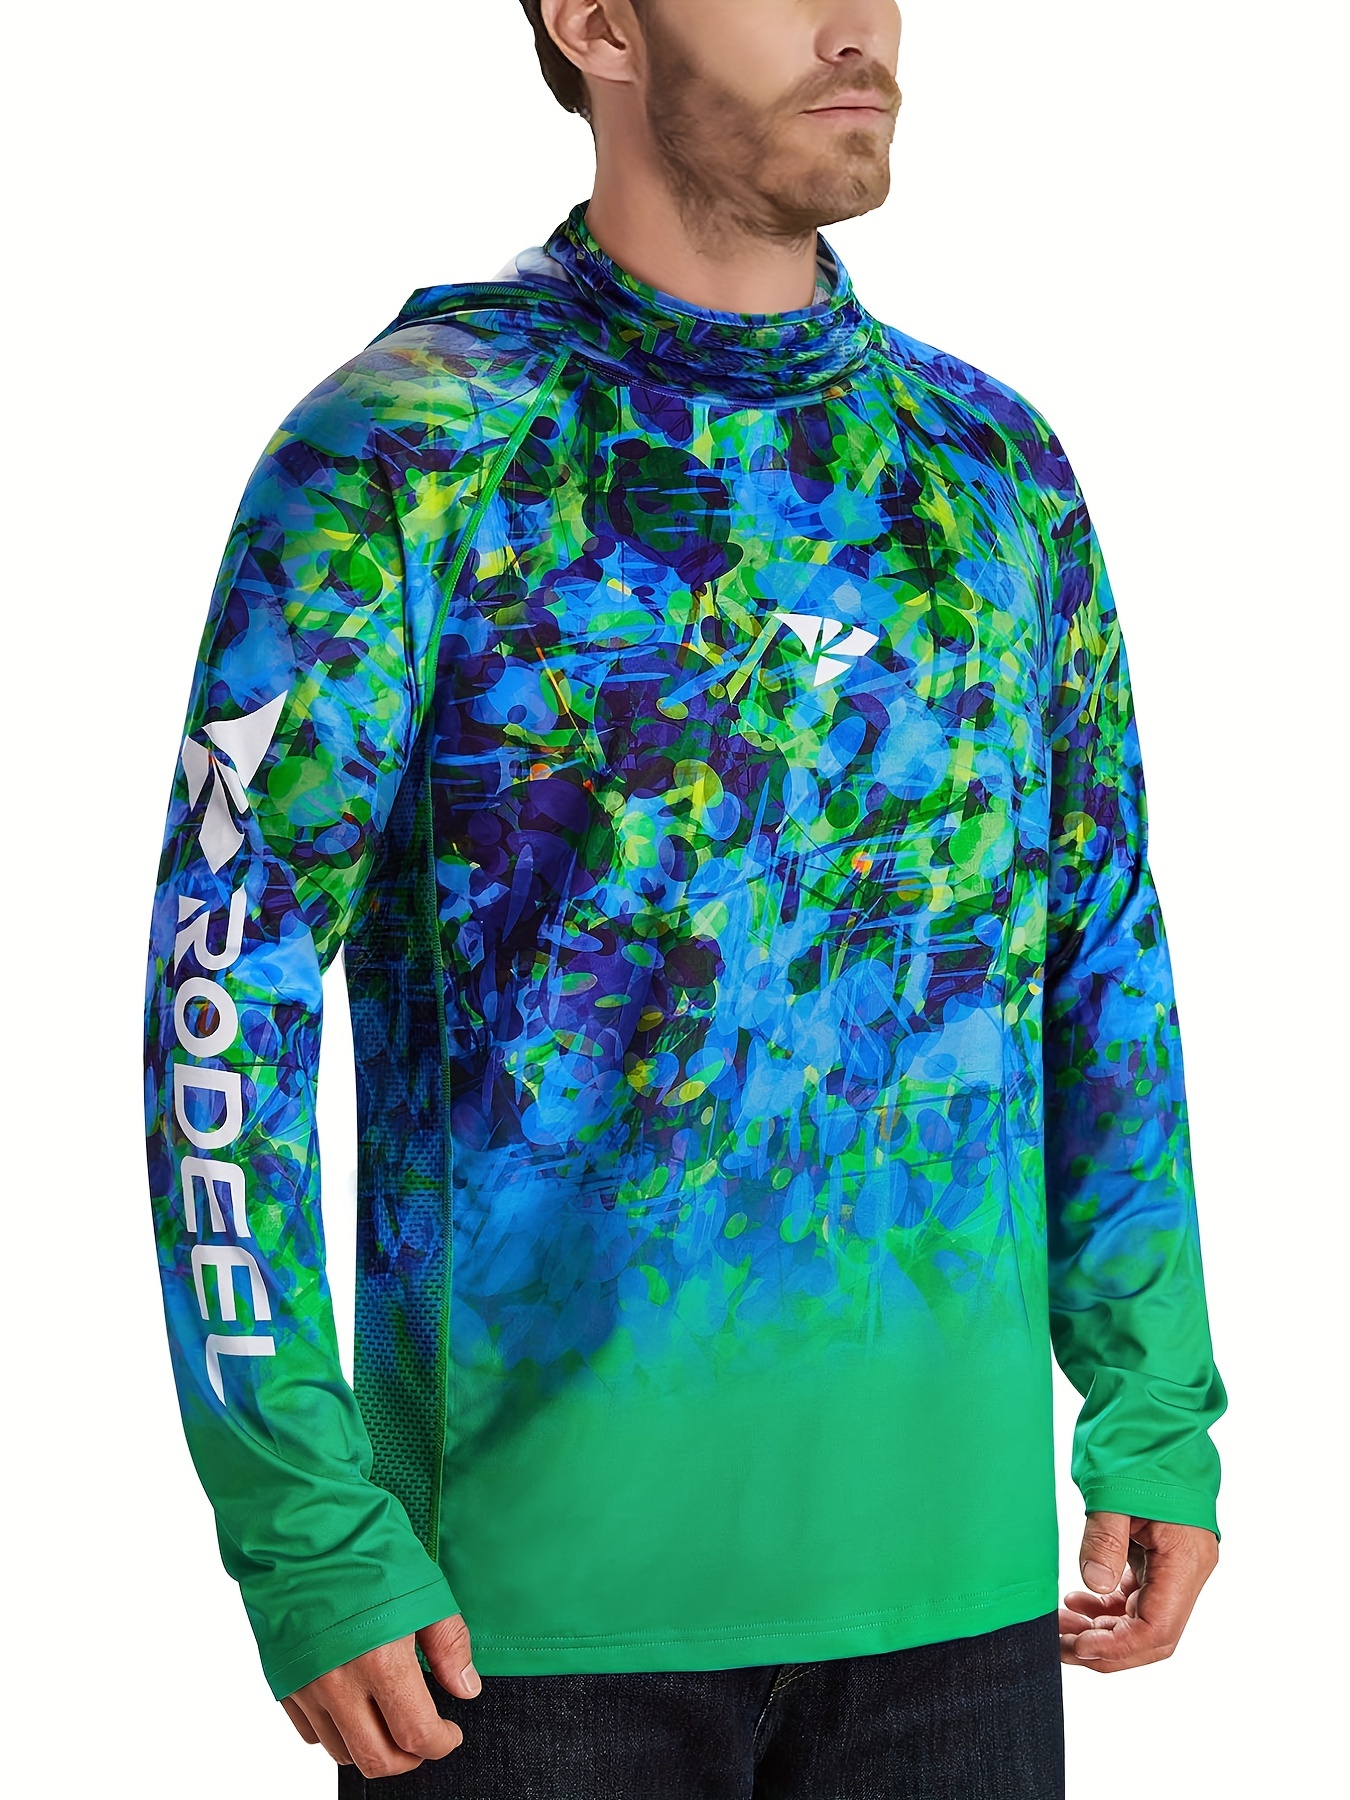 Boladeci SPF Shirts for Men Fishing Hoodie UPF 50+ UV Protection Sun Shirts  Long Sleeve Summer Water Rash Guard Tops Tee Swim T-Shirts L Lake Blue - UV  Protection - High Quality 